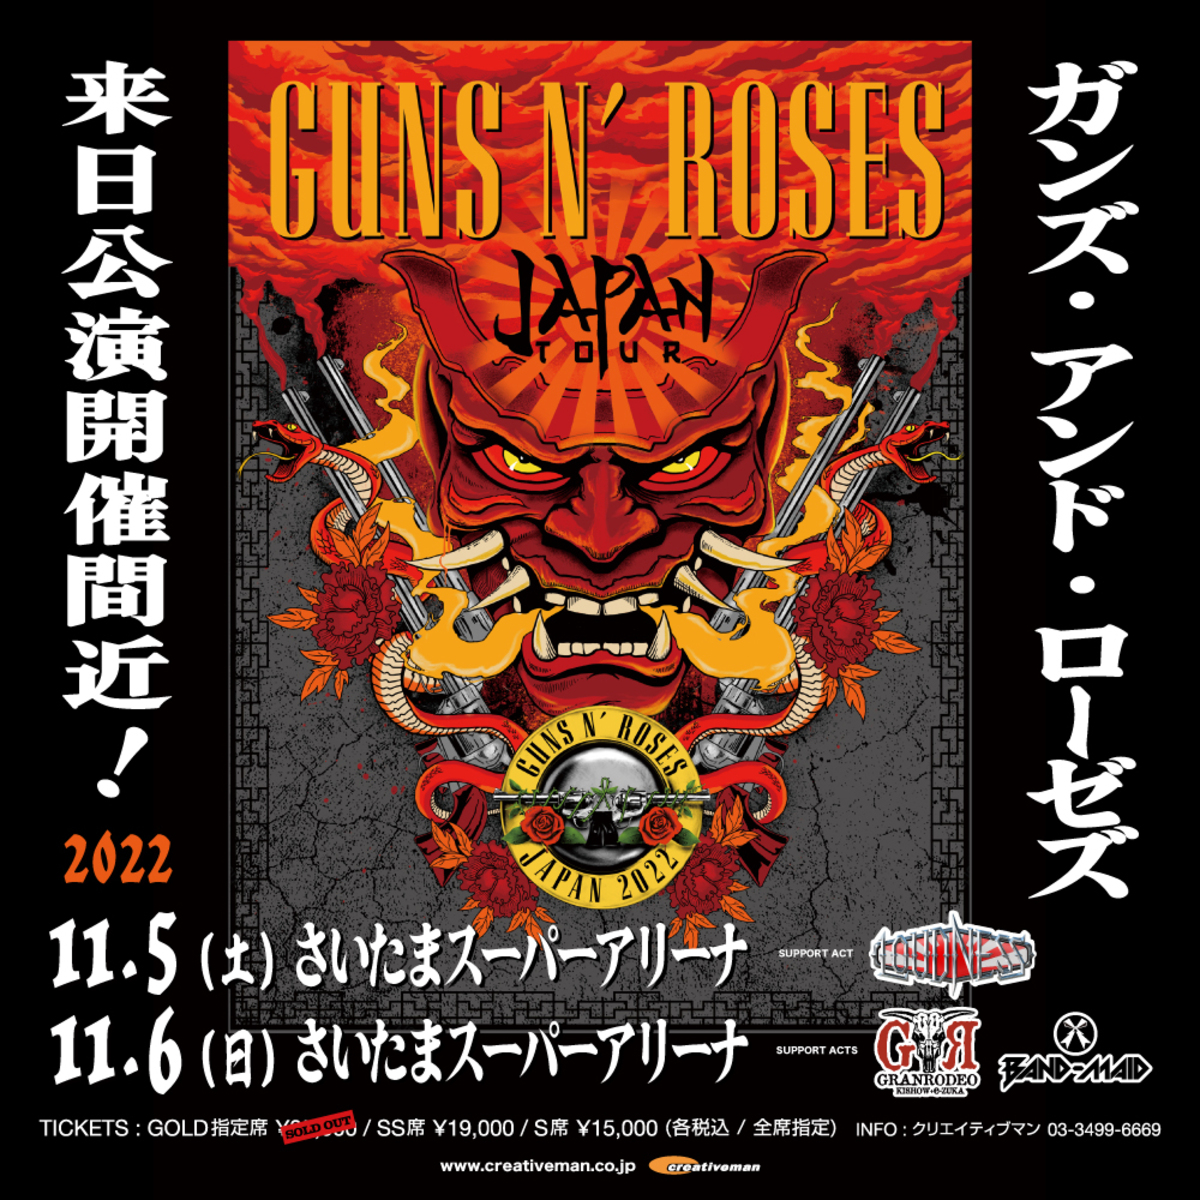 Guns N' Roses 初来日公演 Tシャツ 追加公演となった武道館で購入 44